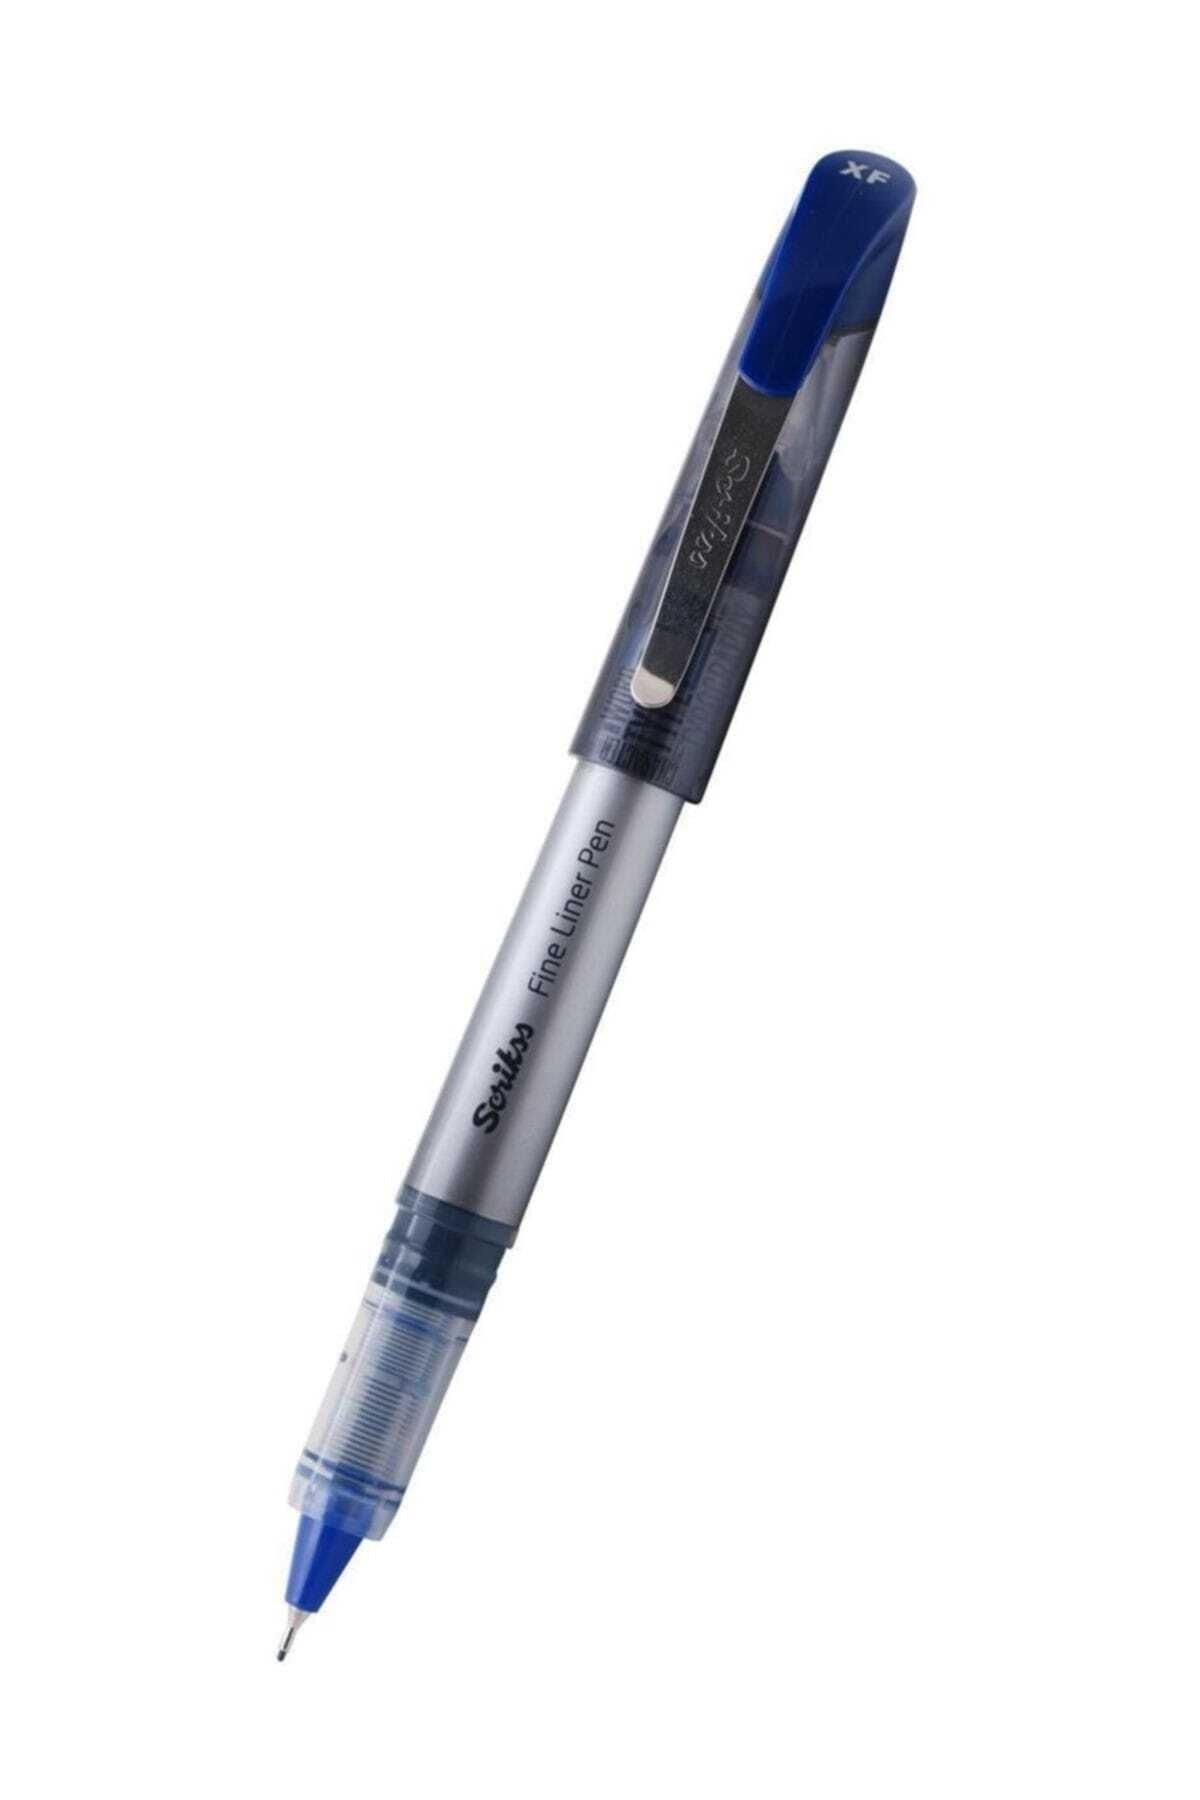 Scrikss Fineliner Keçe Uçlu Kalem 0.6 Mm Mavi (12 Lİ PAKET)